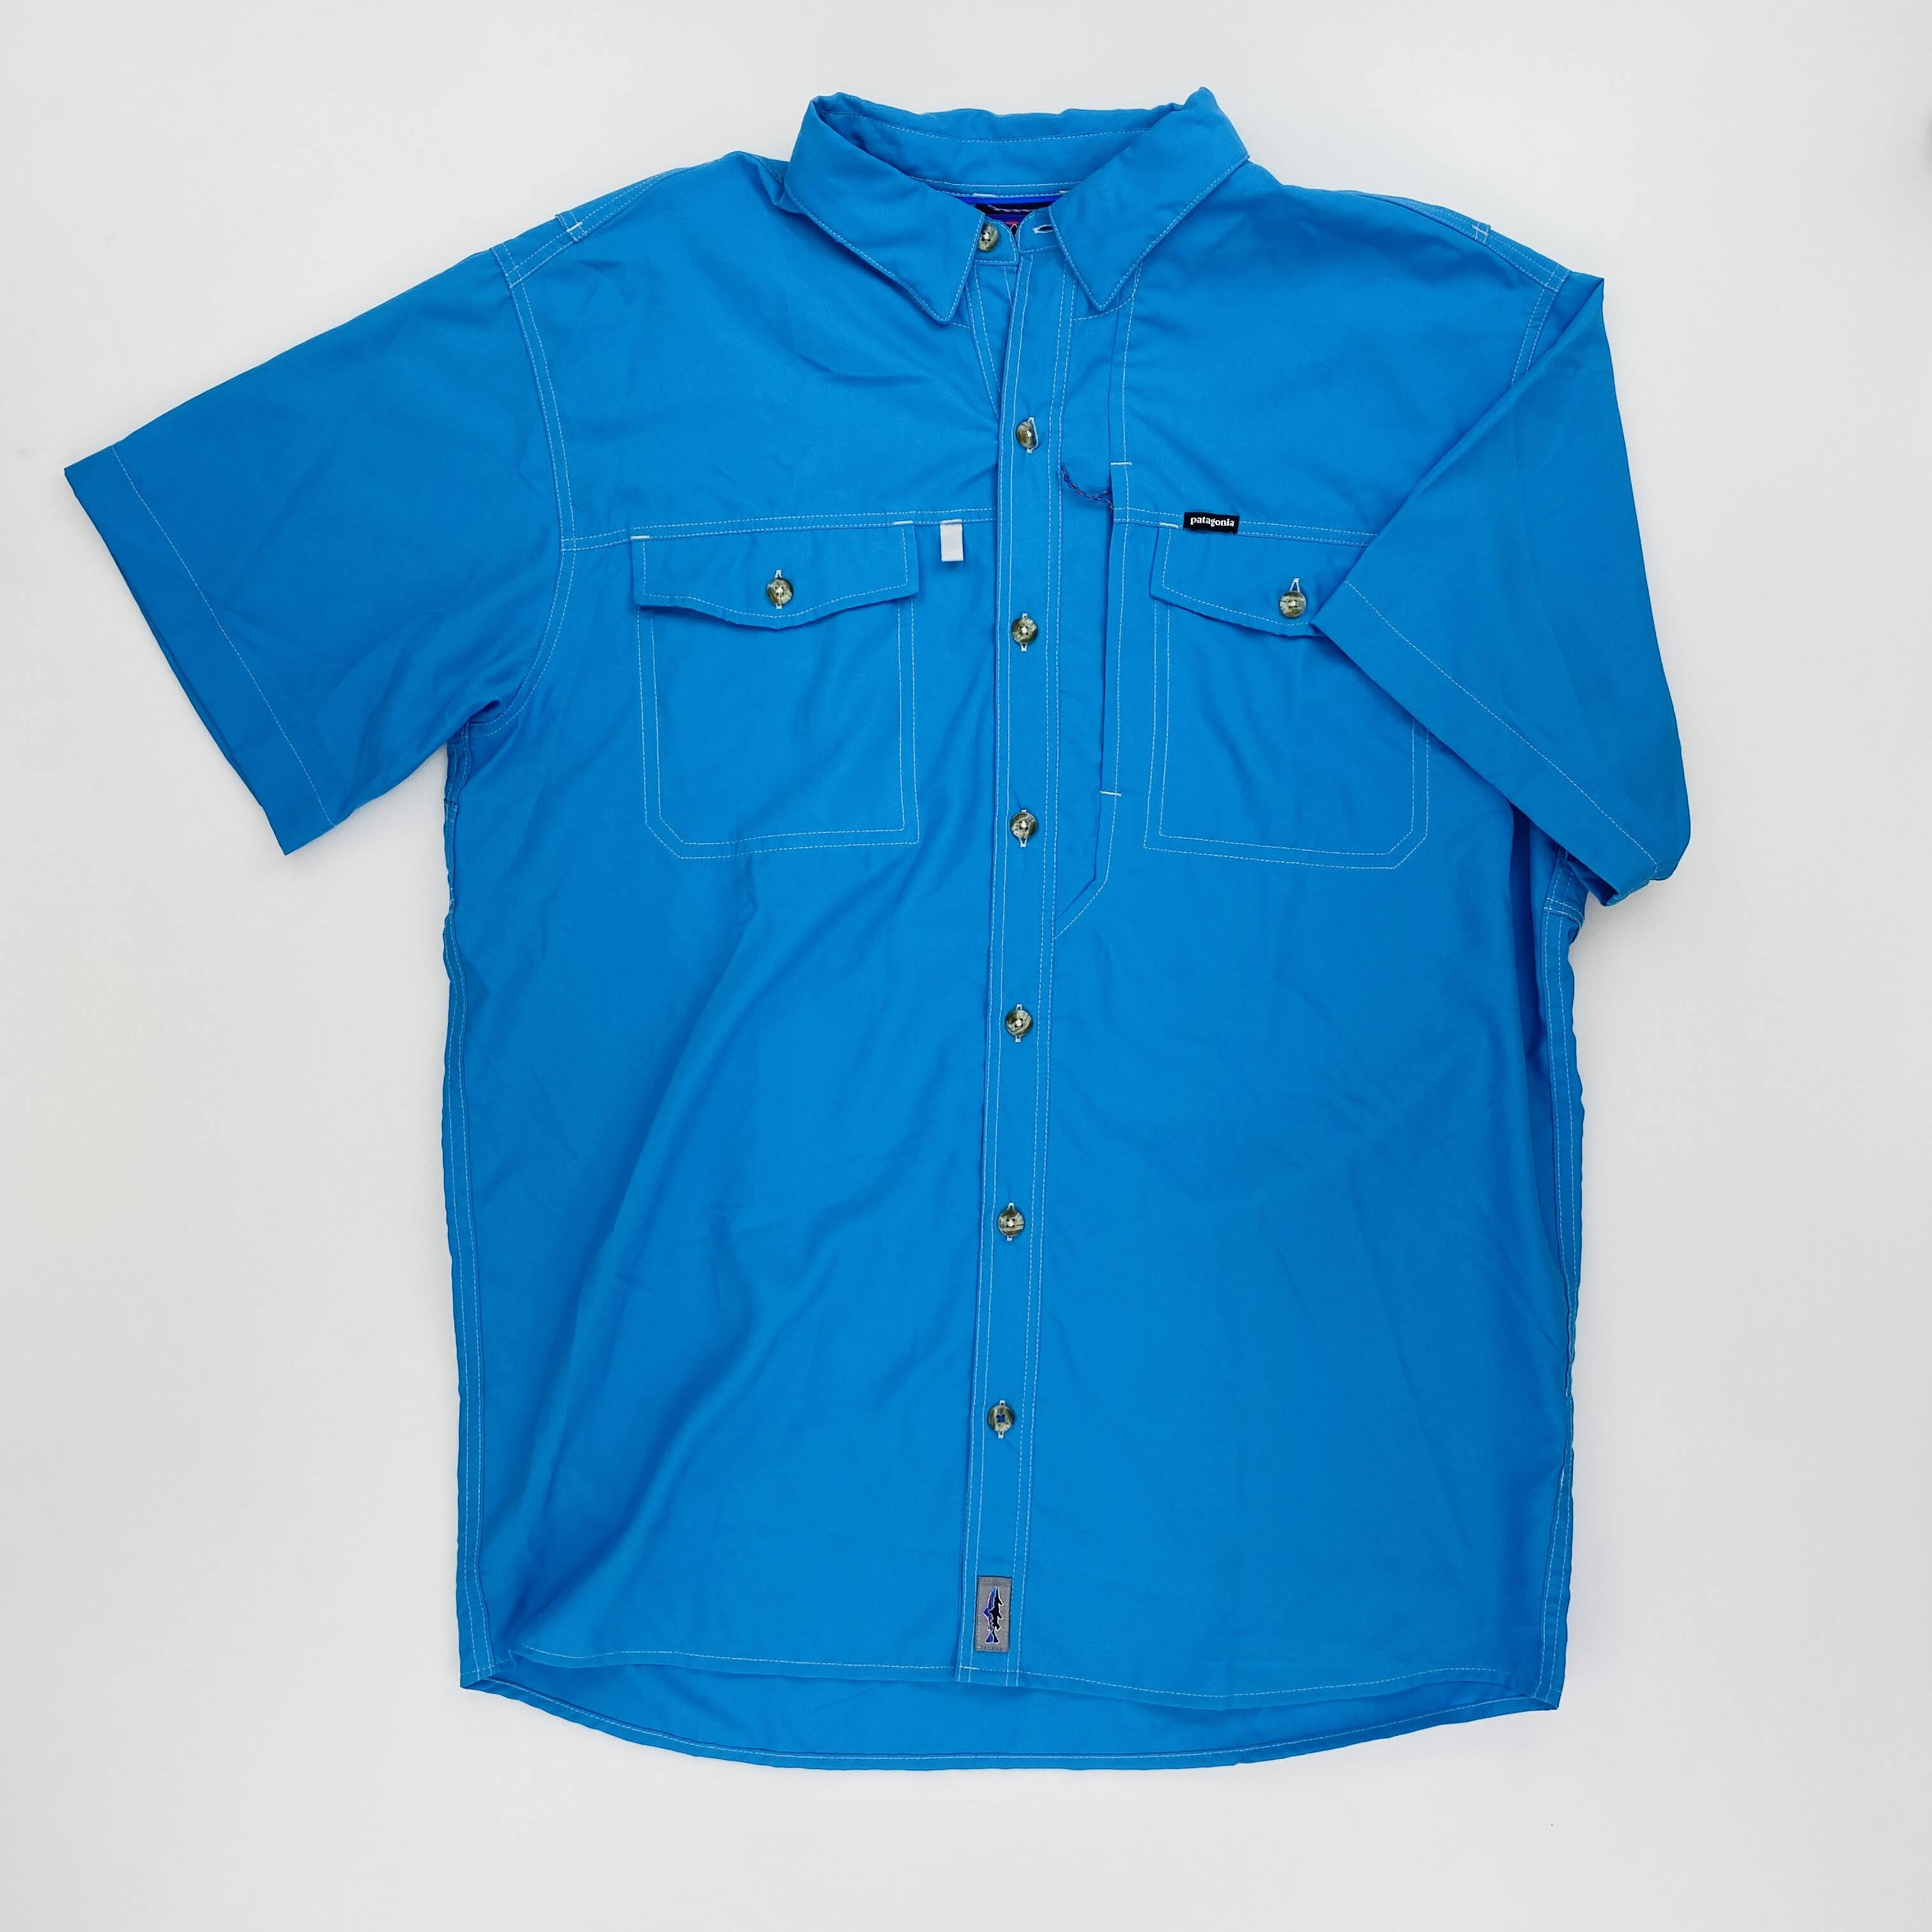 Patagonia M's Sol Patrol II Shirt - Seconde main Chemise homme - Bleu - M | Hardloop